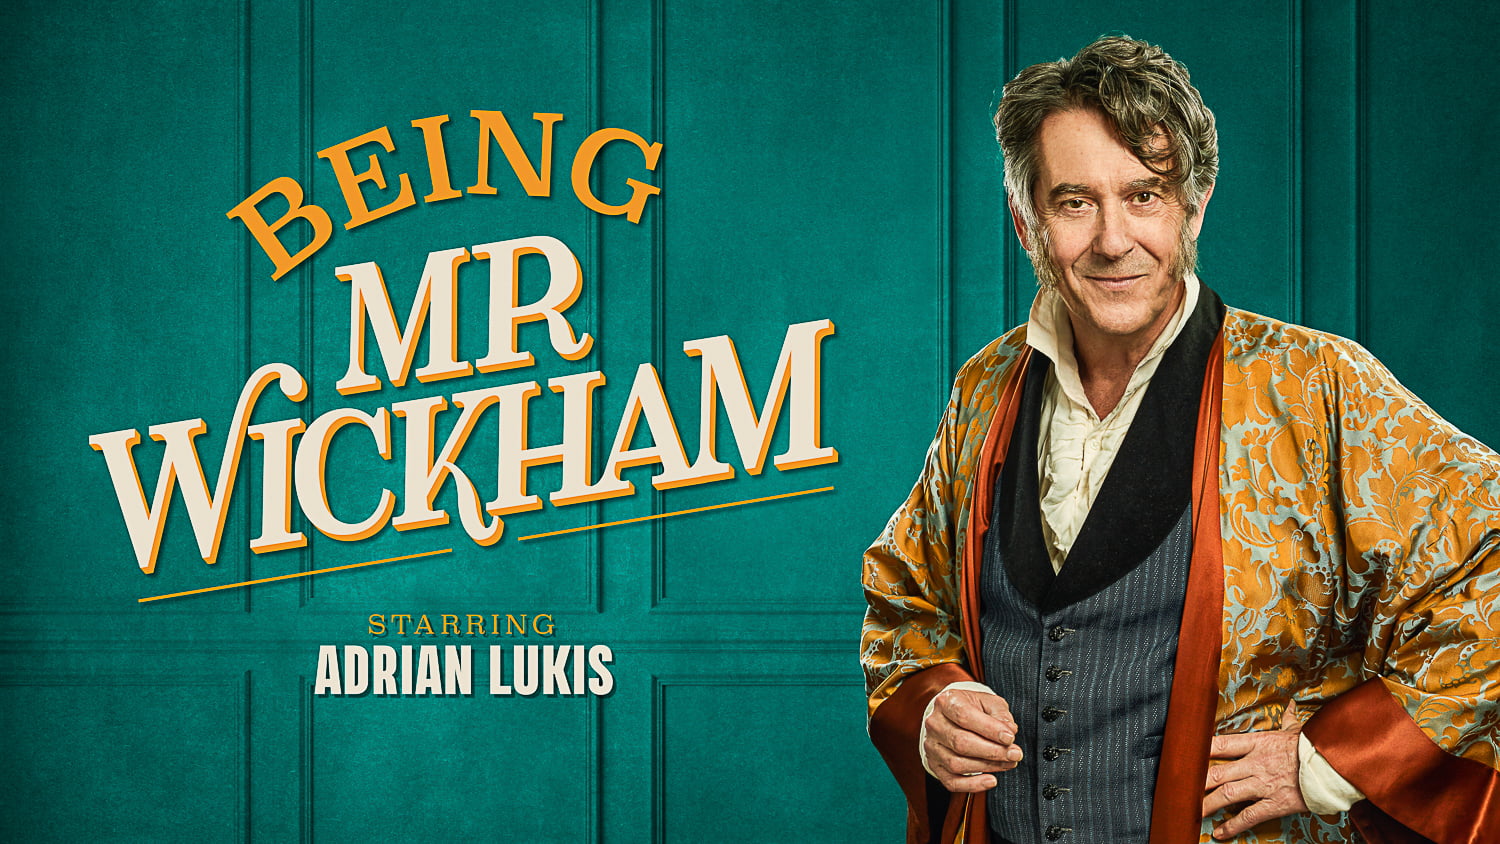 Adrian Lukas in Being Mr Wickham